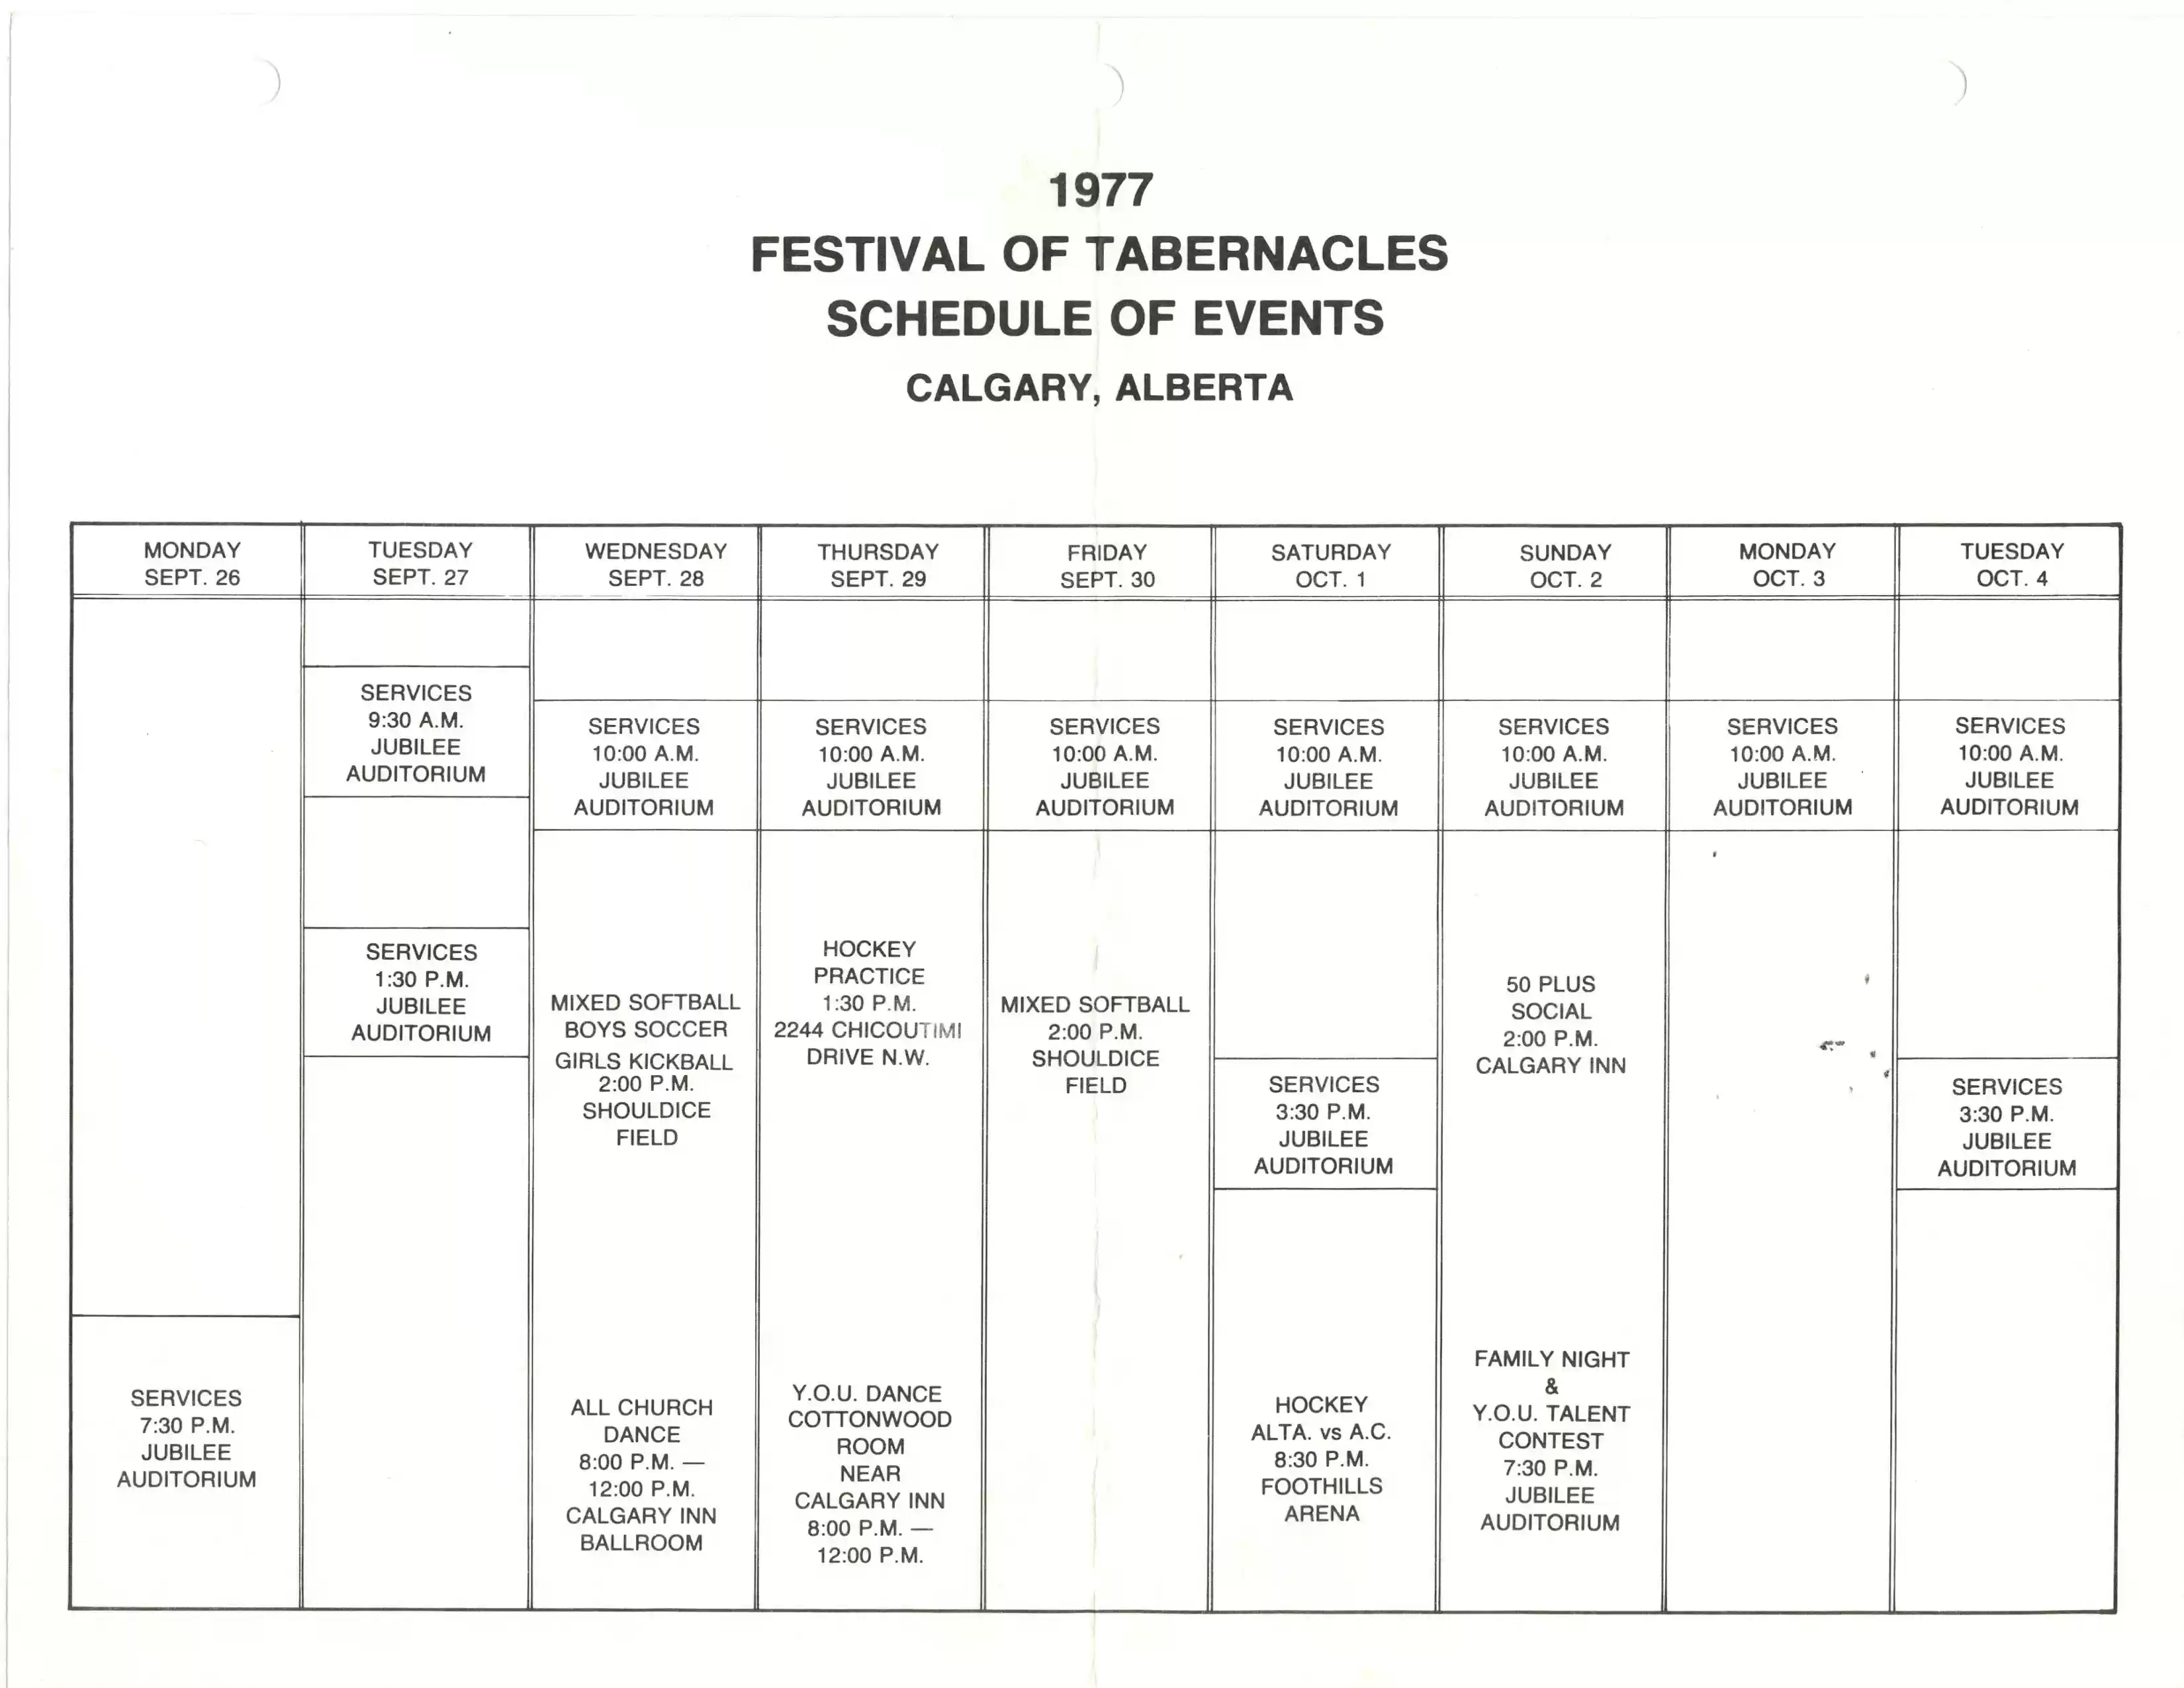 FoT schedule, Calgary, Alberta, 1977